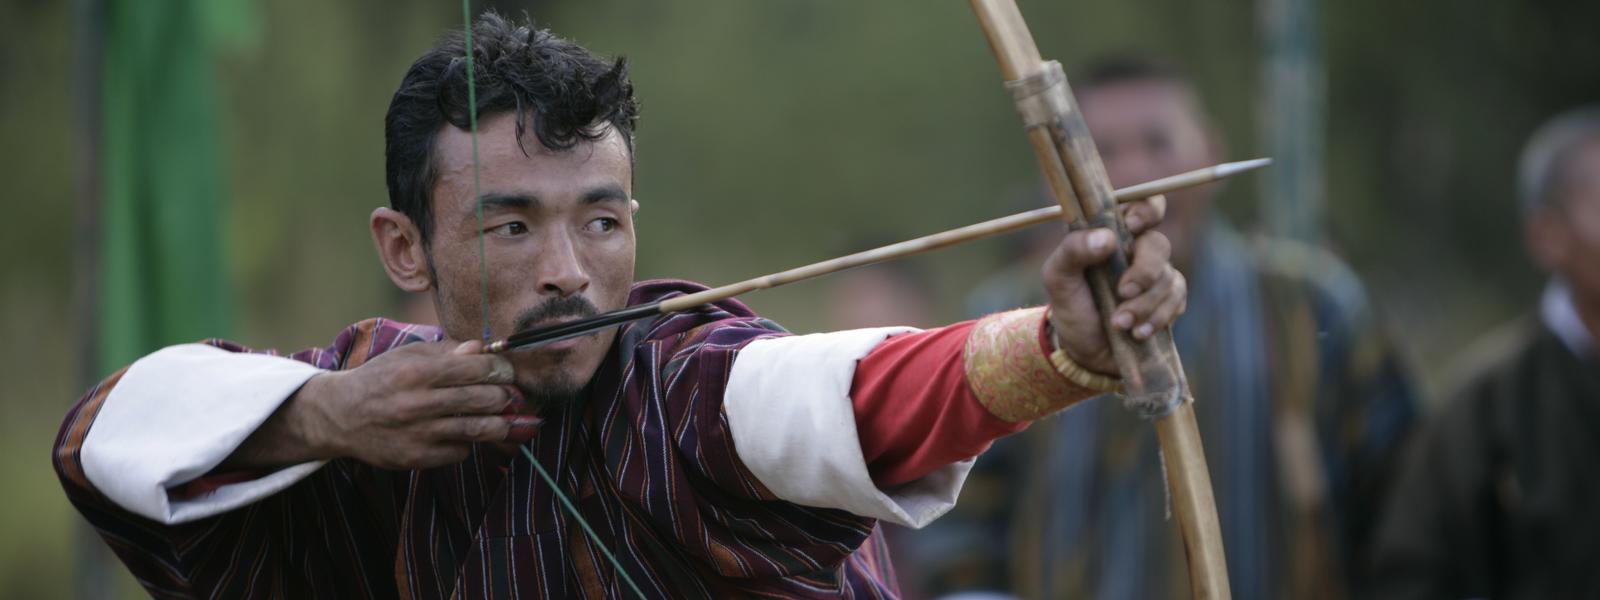 Bhutan archery